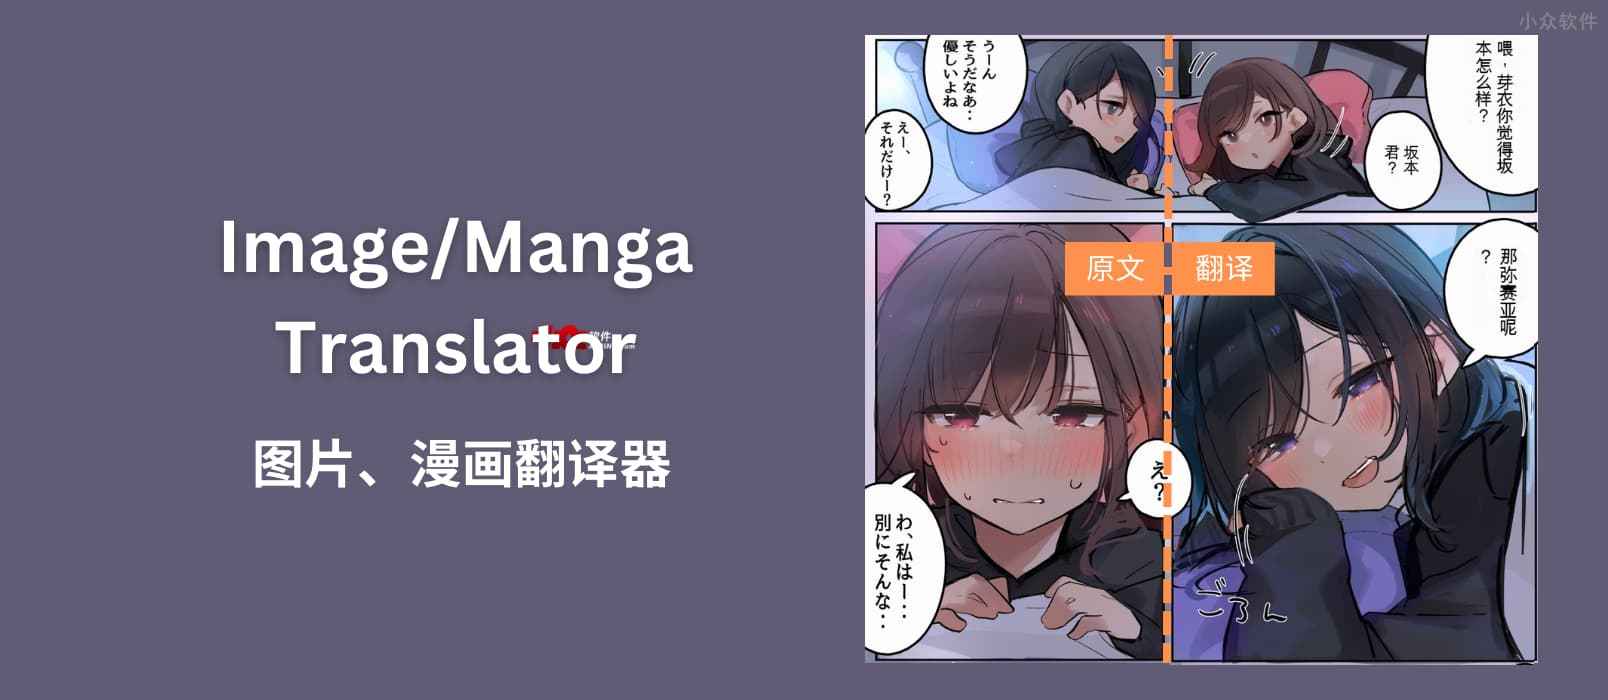 Image/Manga Translator - 图片翻译器、漫画翻译器[自托管]